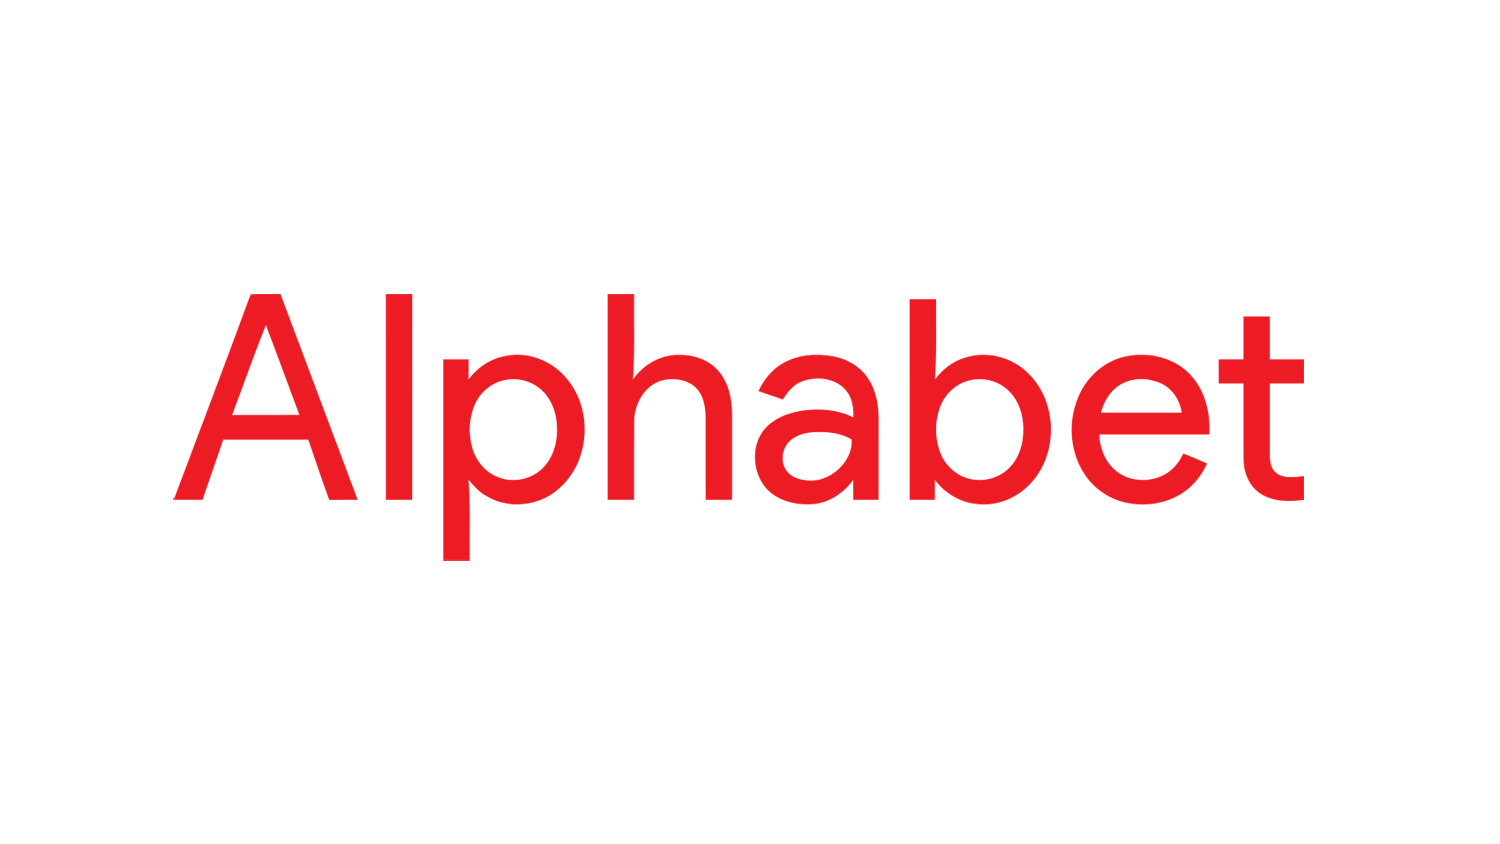 Alphabet Celebrates Its First